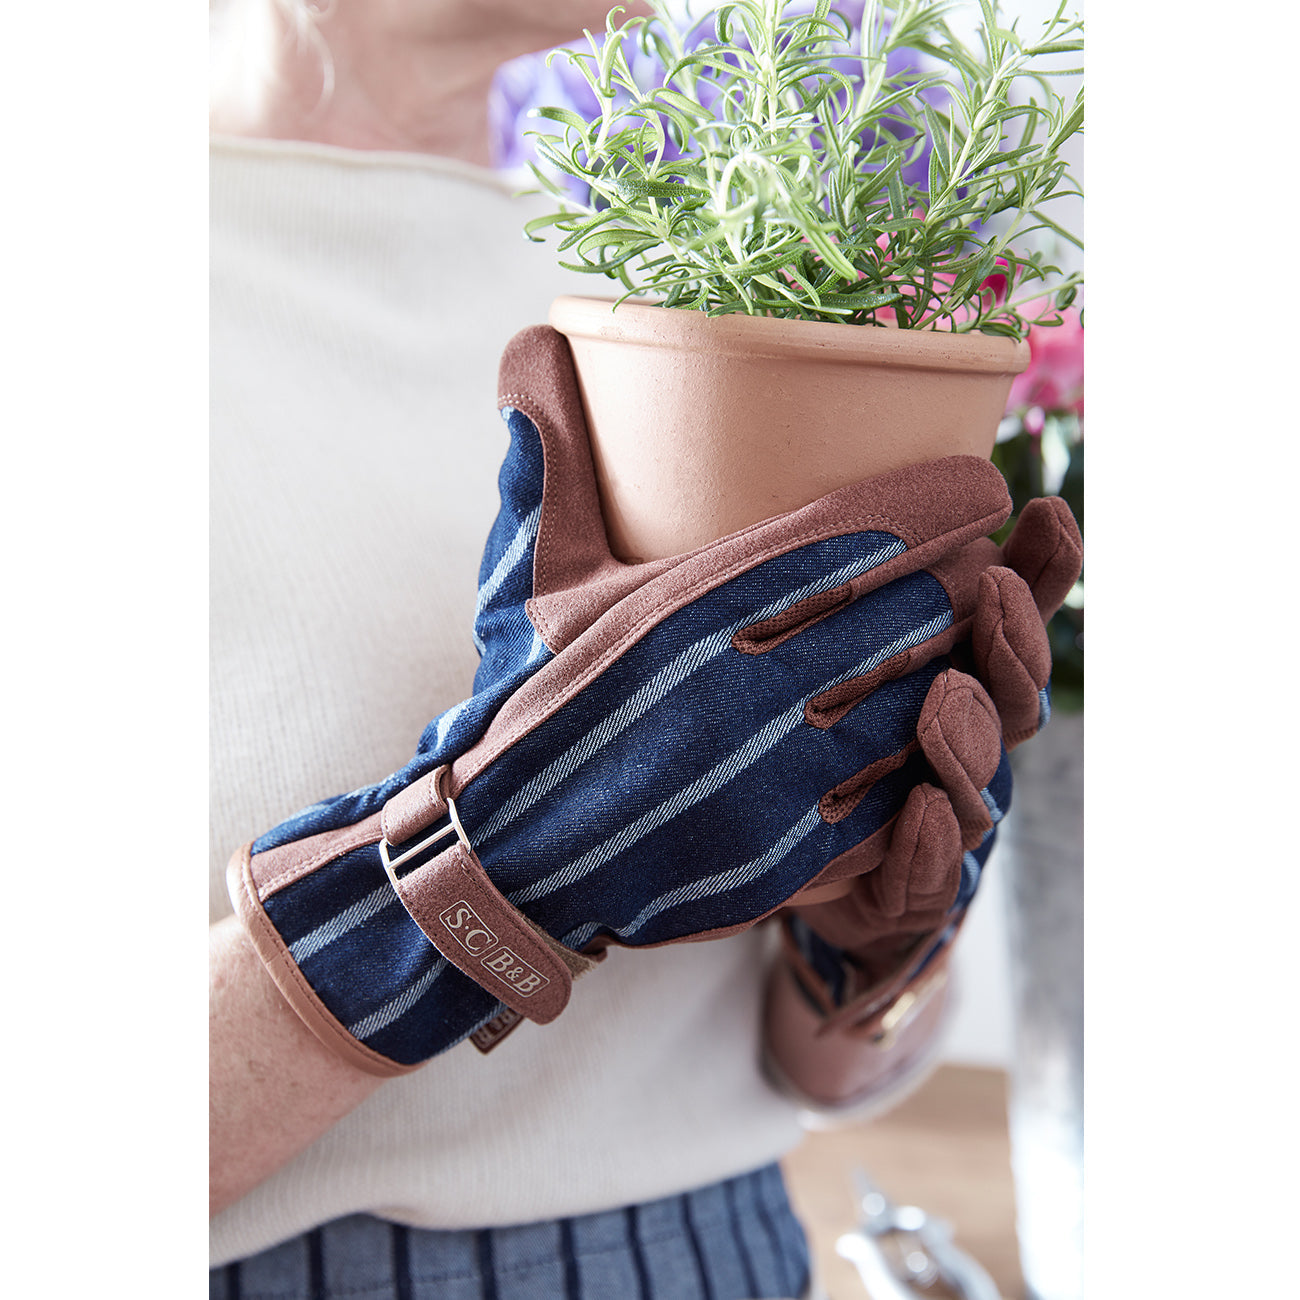 Gardener wearing Sophie Conran for Burgon & Ball Everyday Gardening Gloves in classic blue ticking stripe.